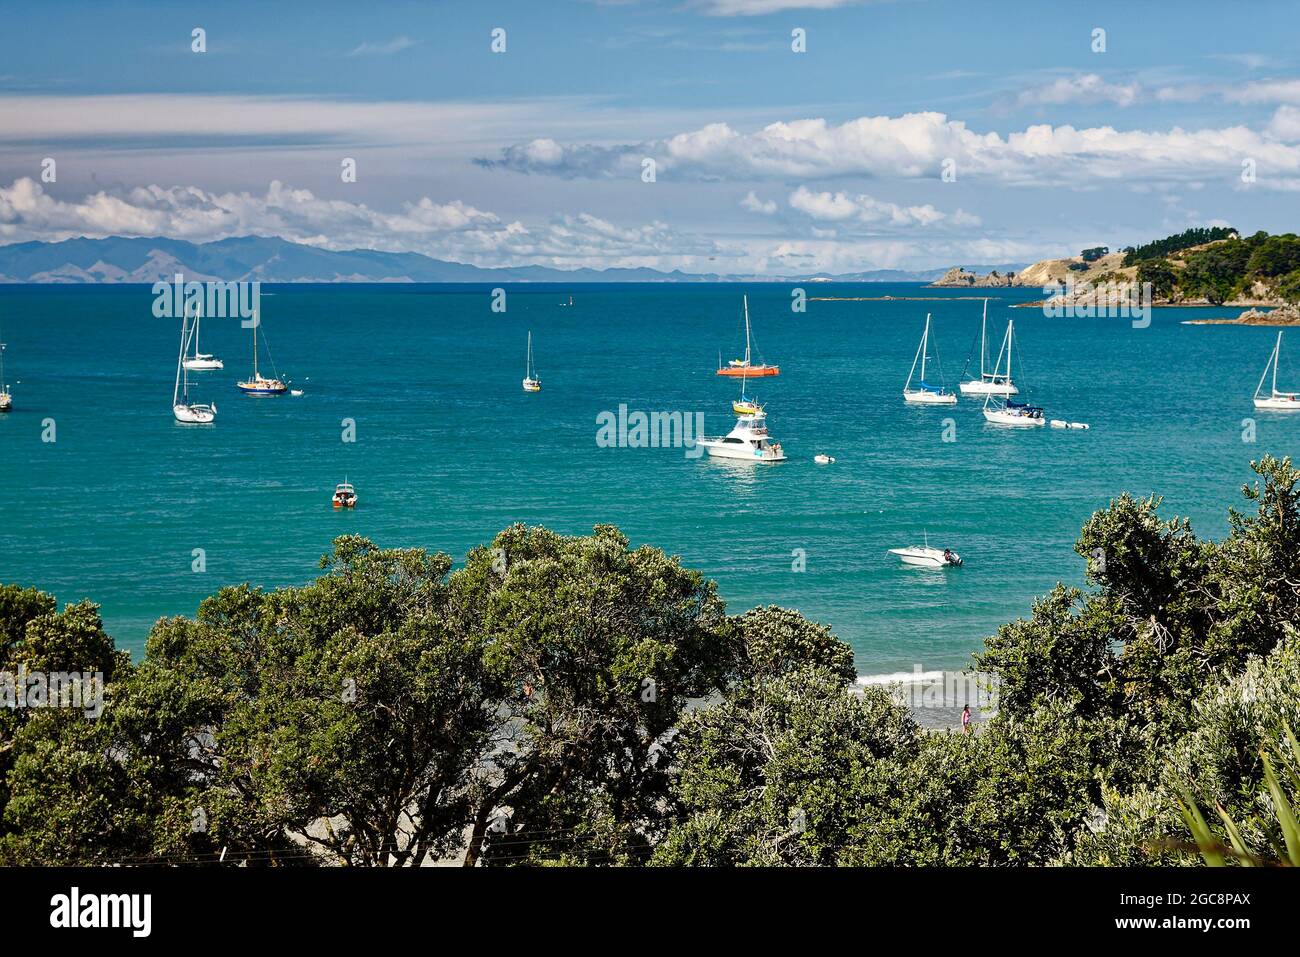 peaceful cove; Hauraki Gulf; boats anchored; hills; trees; aqua water; recreation; marine scene, trees, Waiheke Island; New Zealand Stock Photo